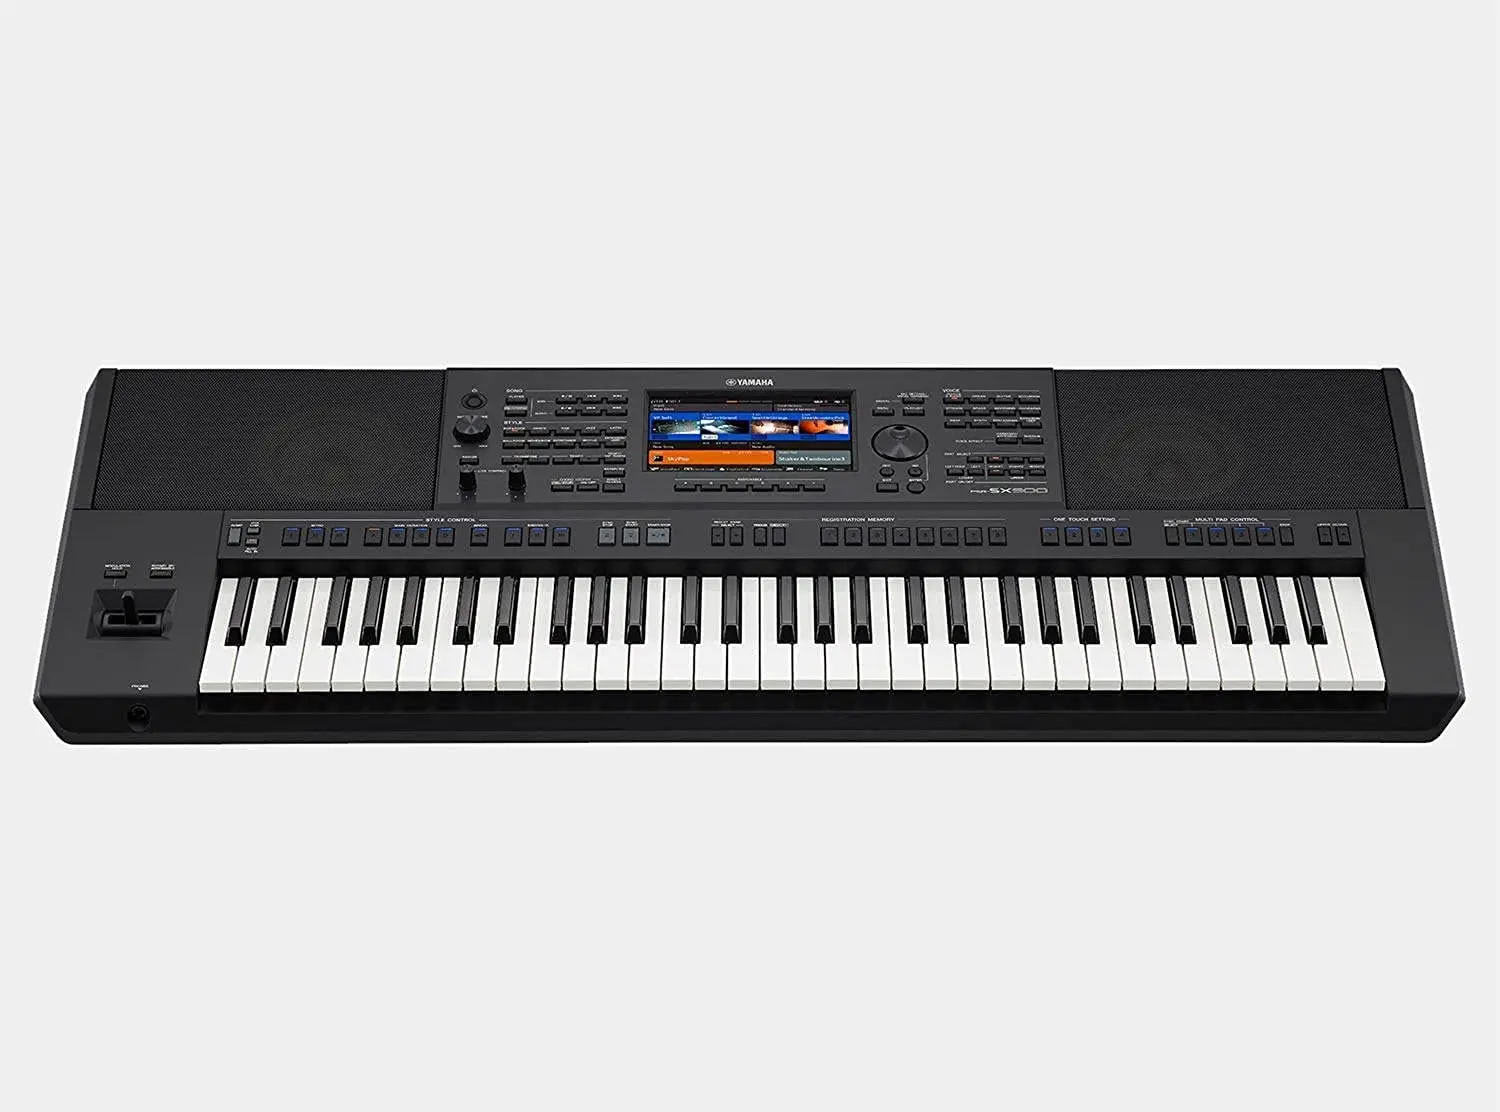 (НОВЫЙ бренд) Набор клавиатур PSR SX900 S975 SX700 S970 Deluxe keyboards3